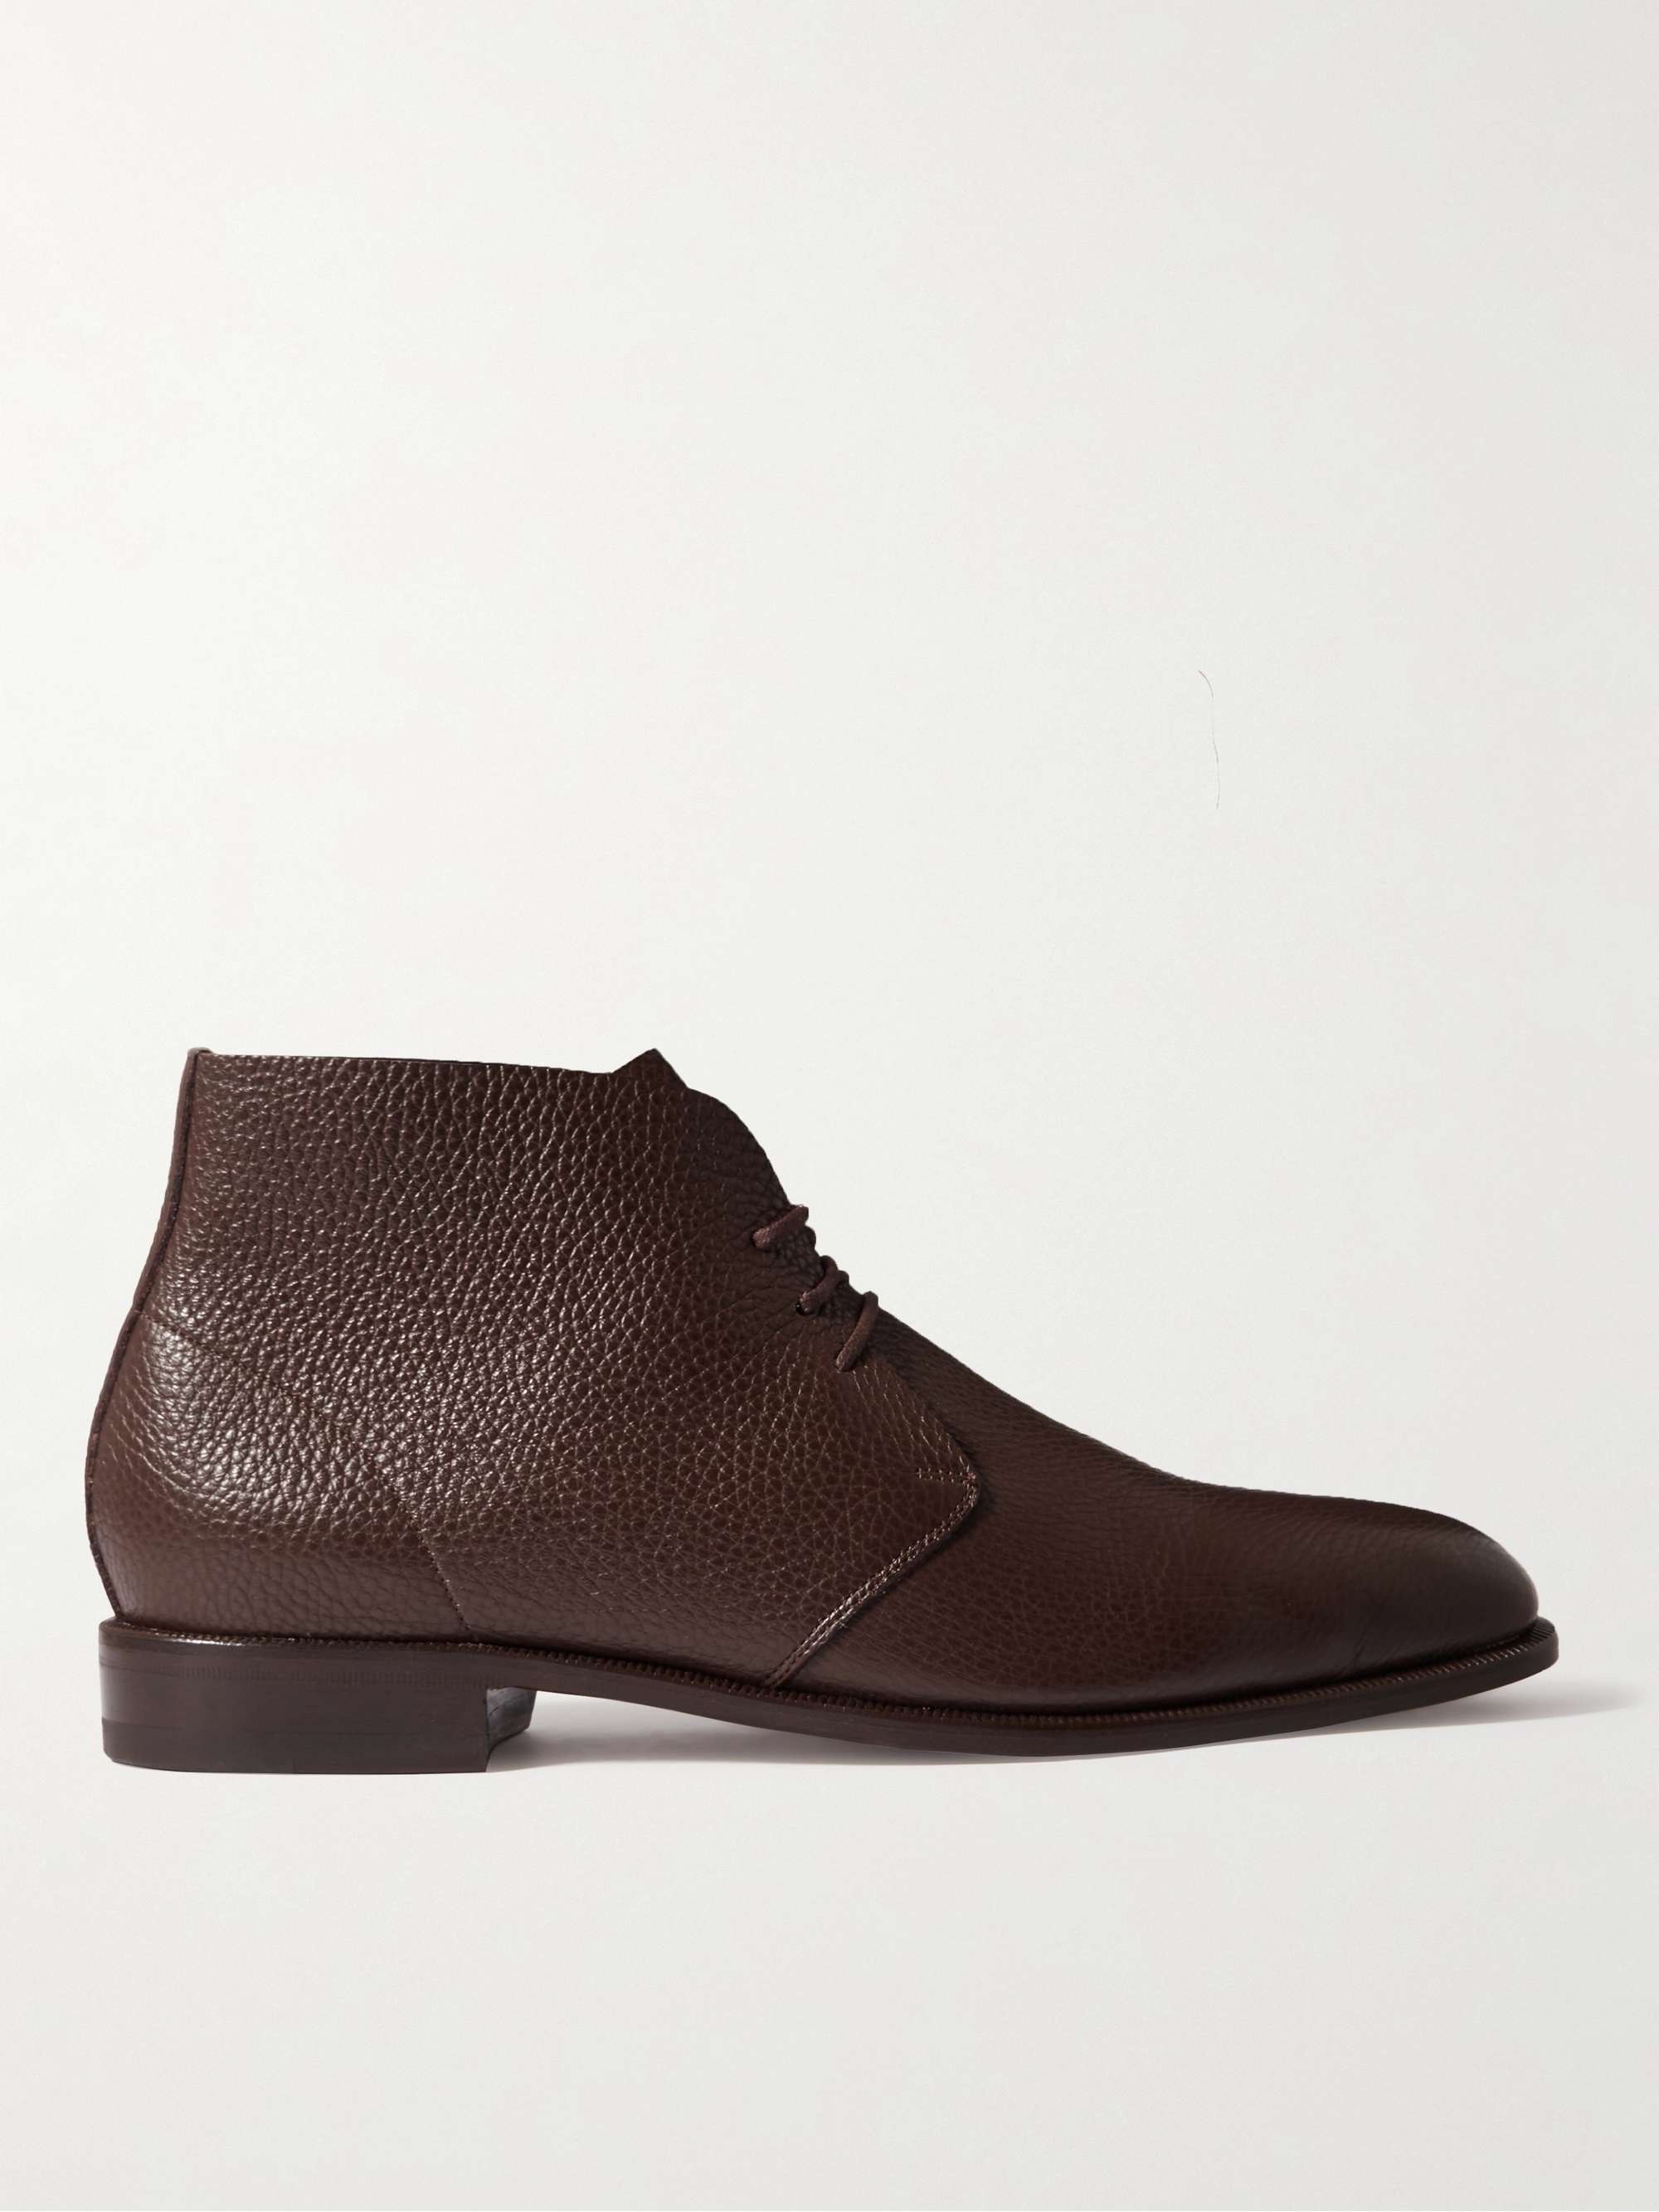 MANOLO BLAHNIK Berwick Full-Grain Leather Chukka Boots | MR PORTER